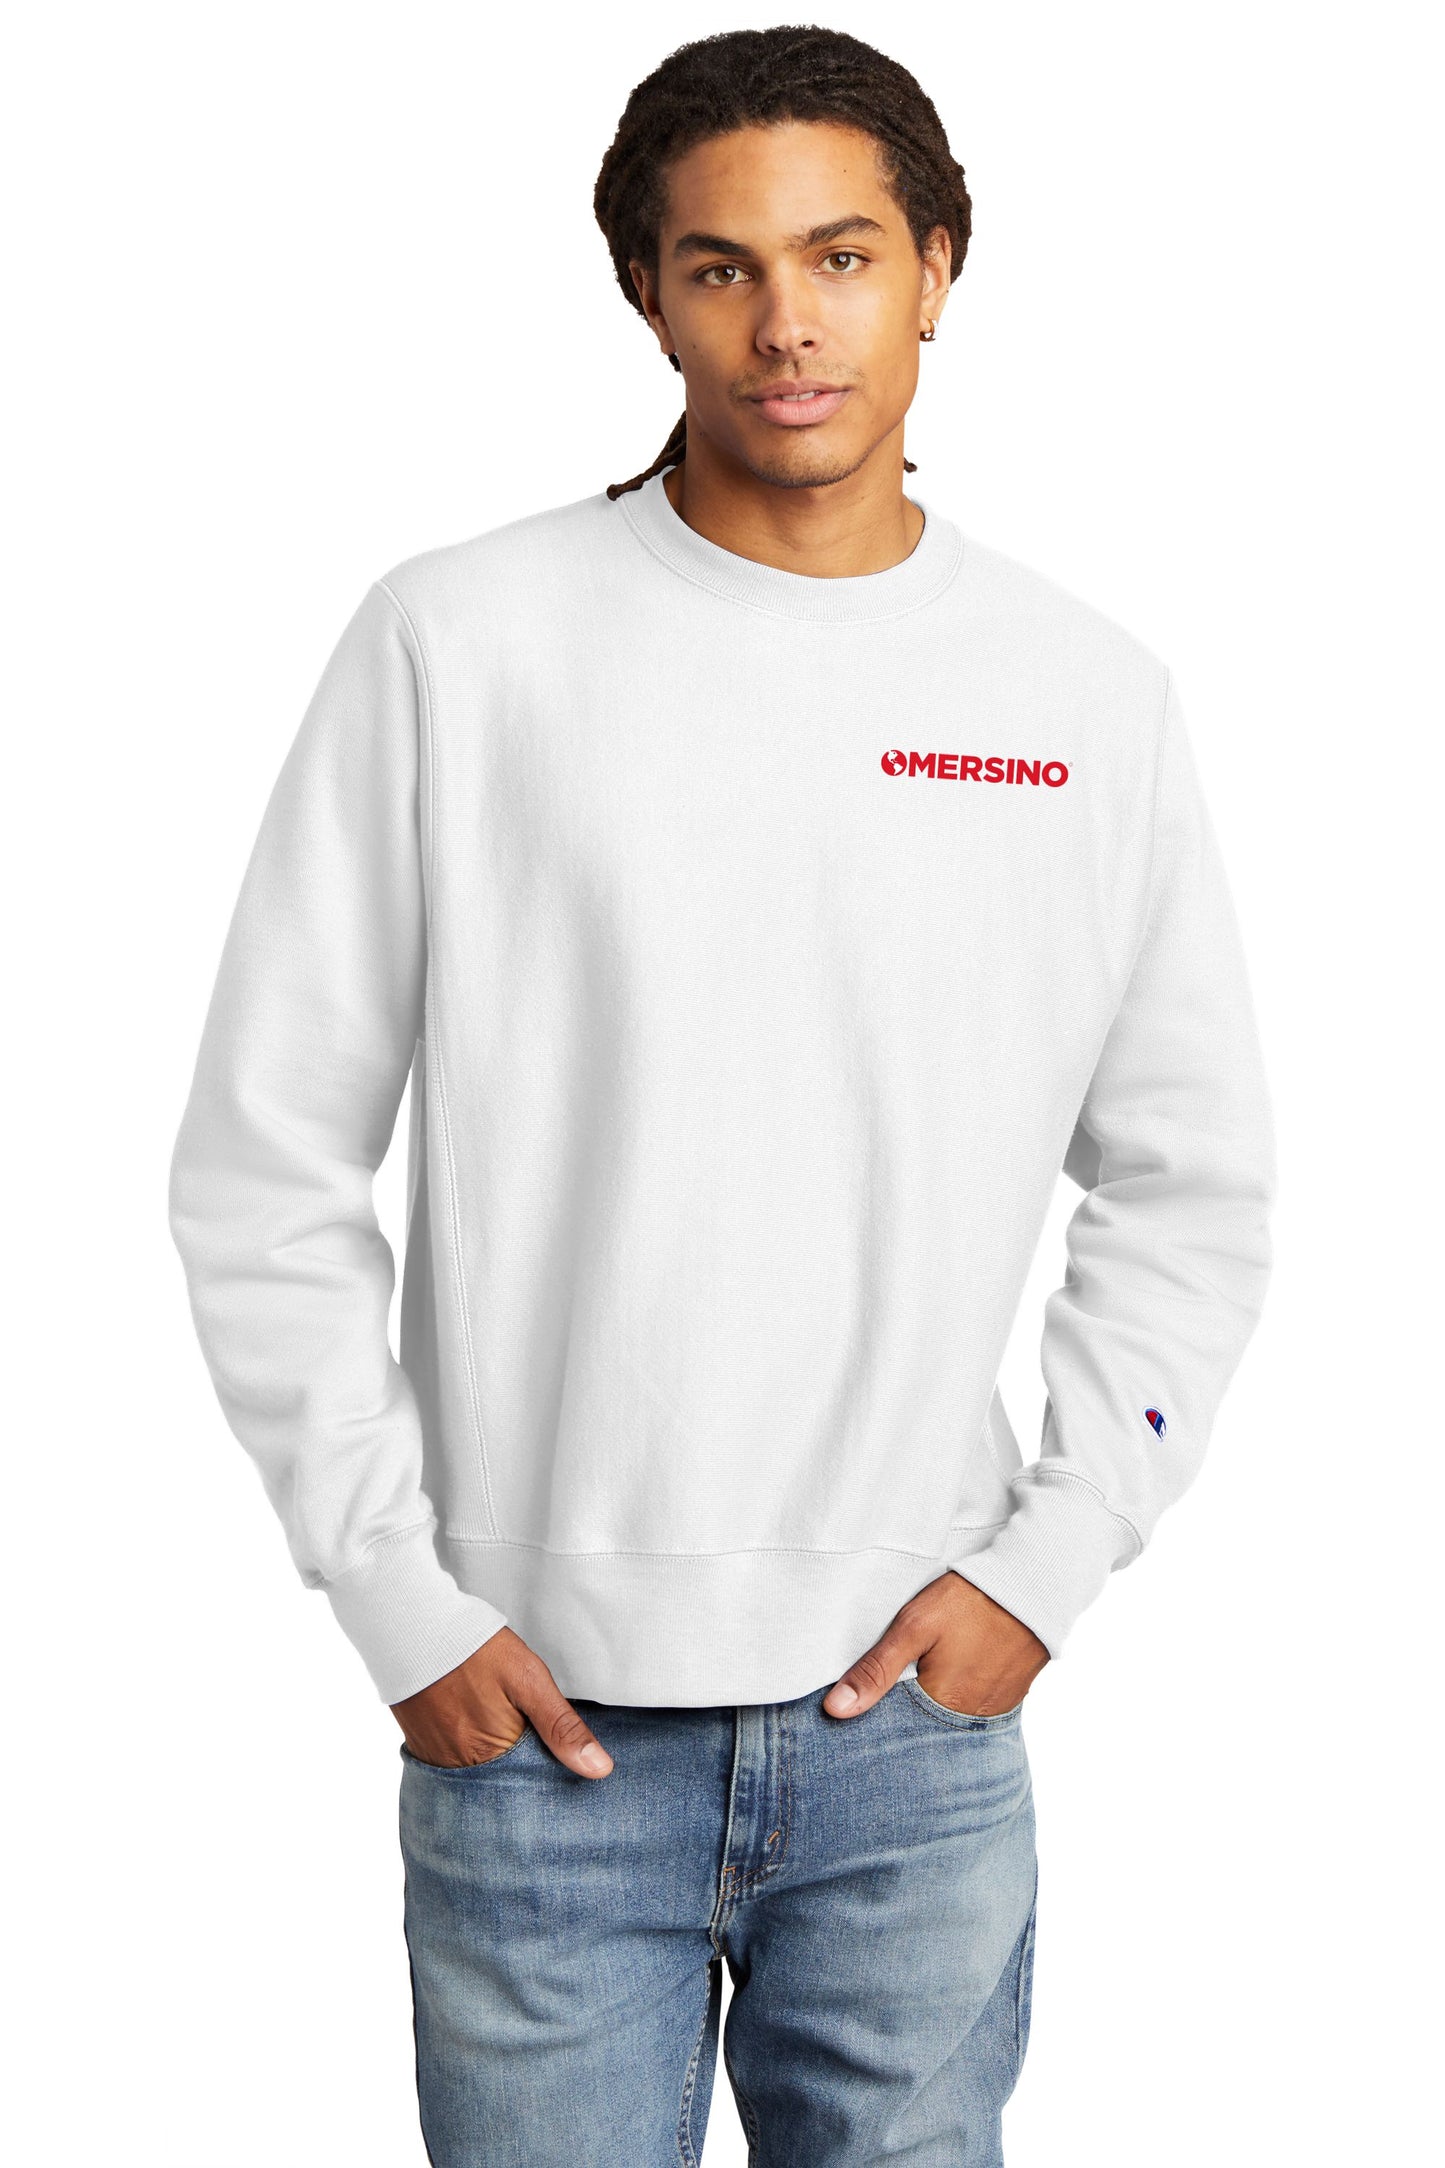 Mersino Champion ® Reverse Weave ® Crewneck Sweatshirt